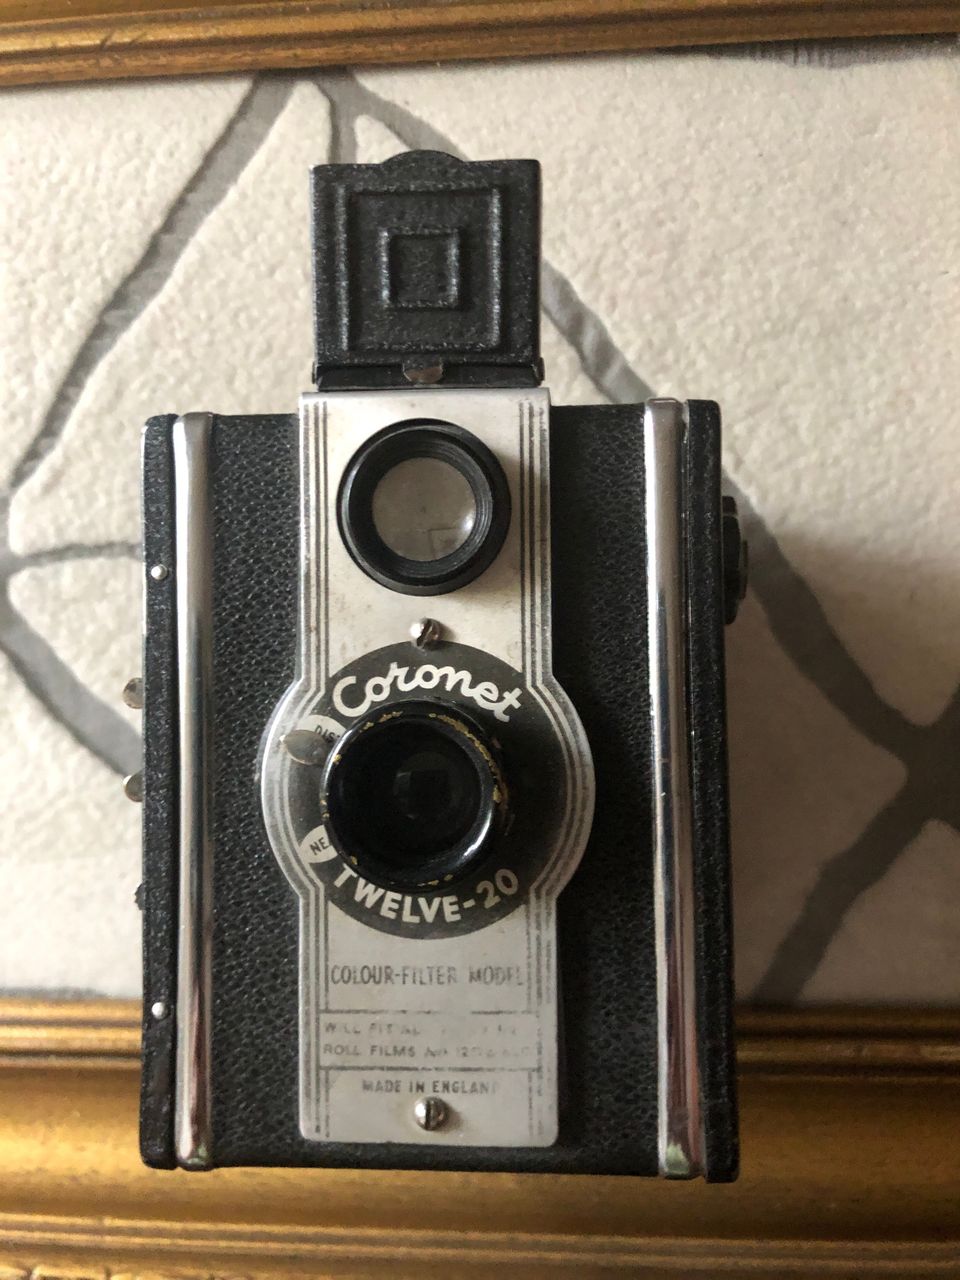 Coronet Twelve-20 kamera